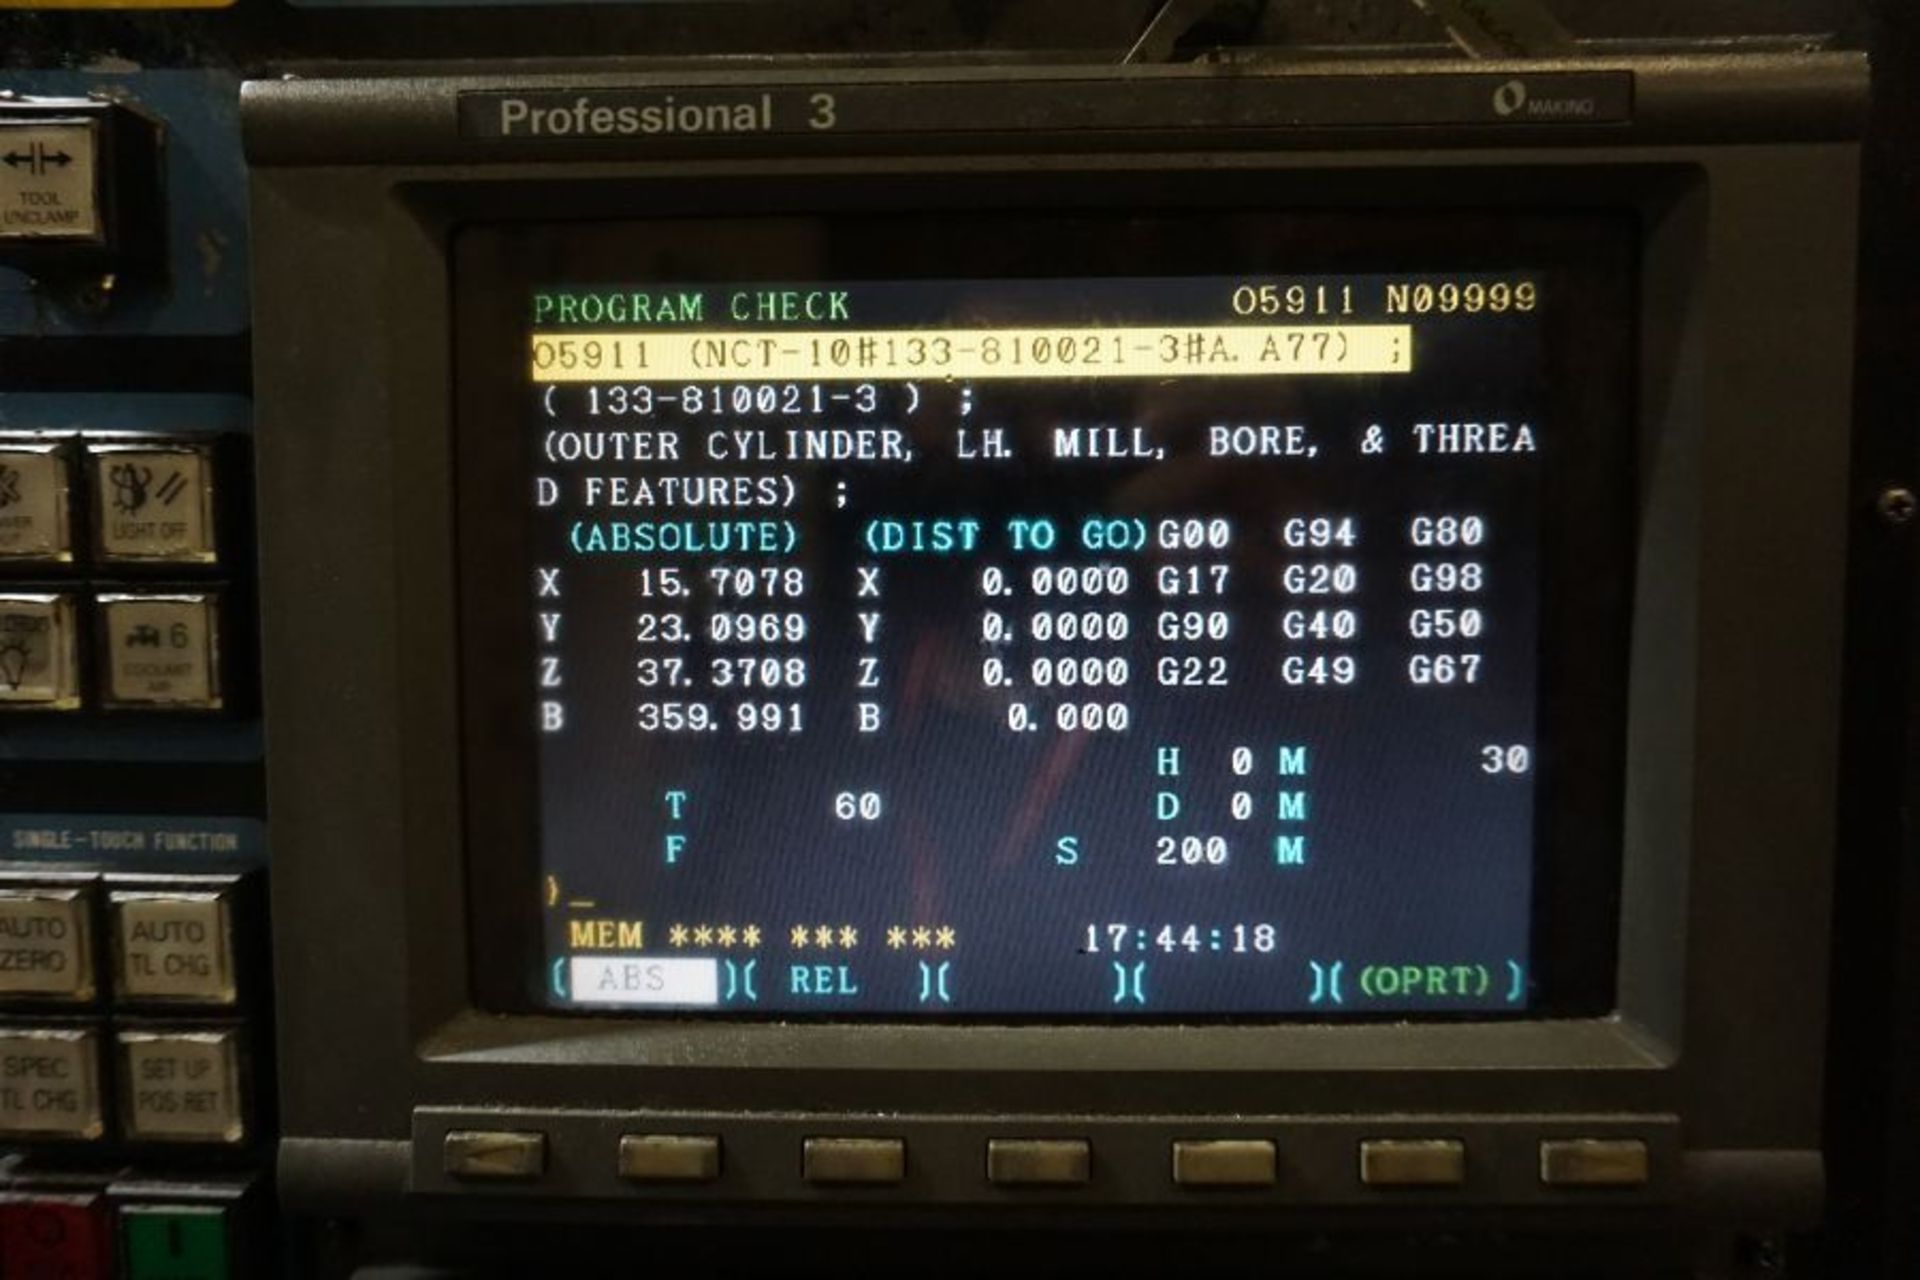 1996, Makino A77 4-Axis HMC, Professional 3 Ctrl, (2) 25" Pallets 12K RPM, CT50, 60 ATC, CTS - Image 9 of 9